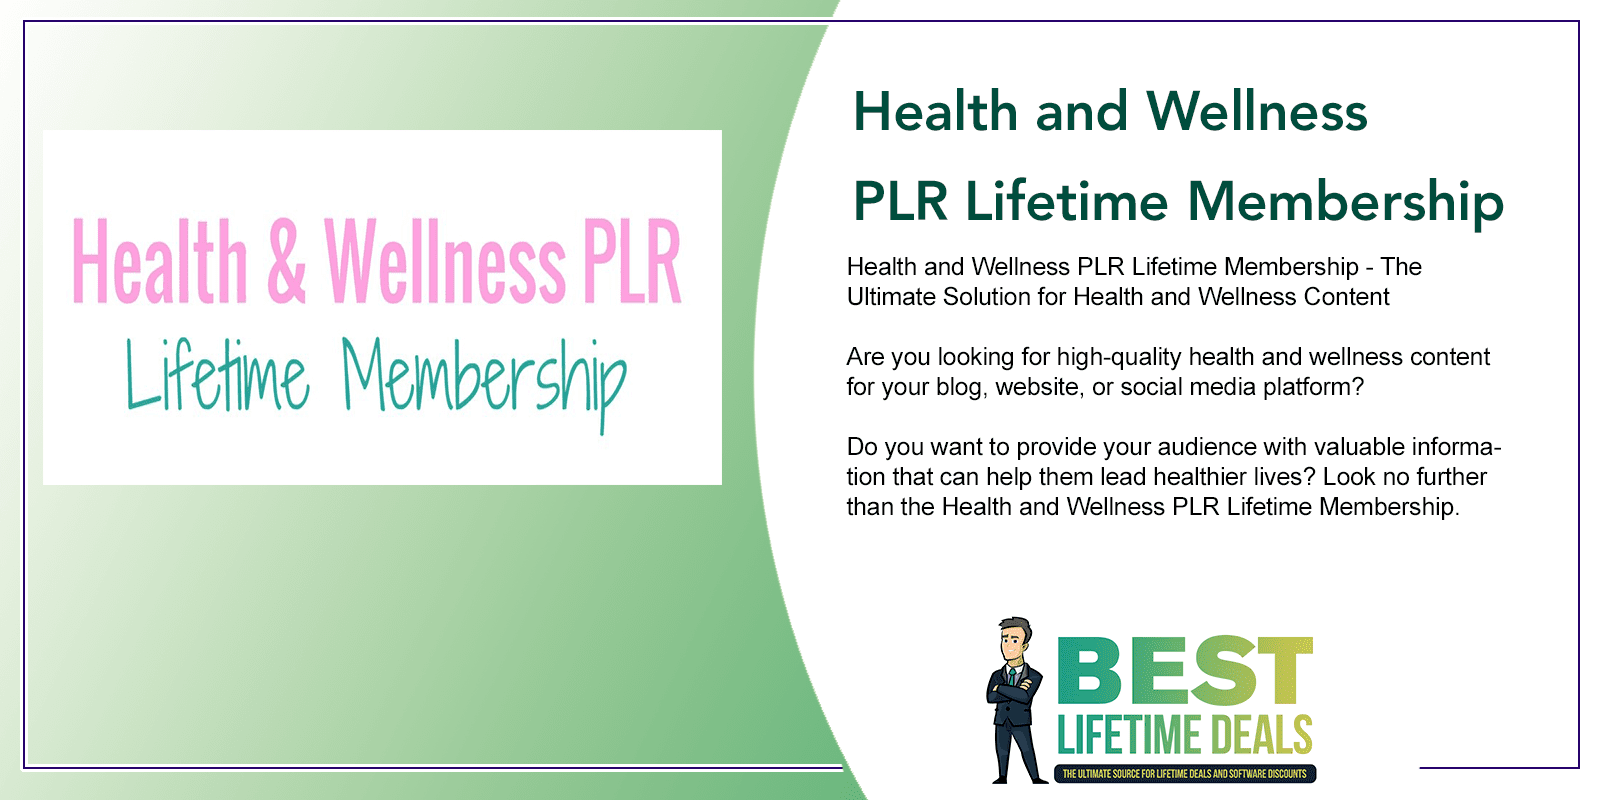 Health and Wellness PLR Lifetime Membership Featured Image